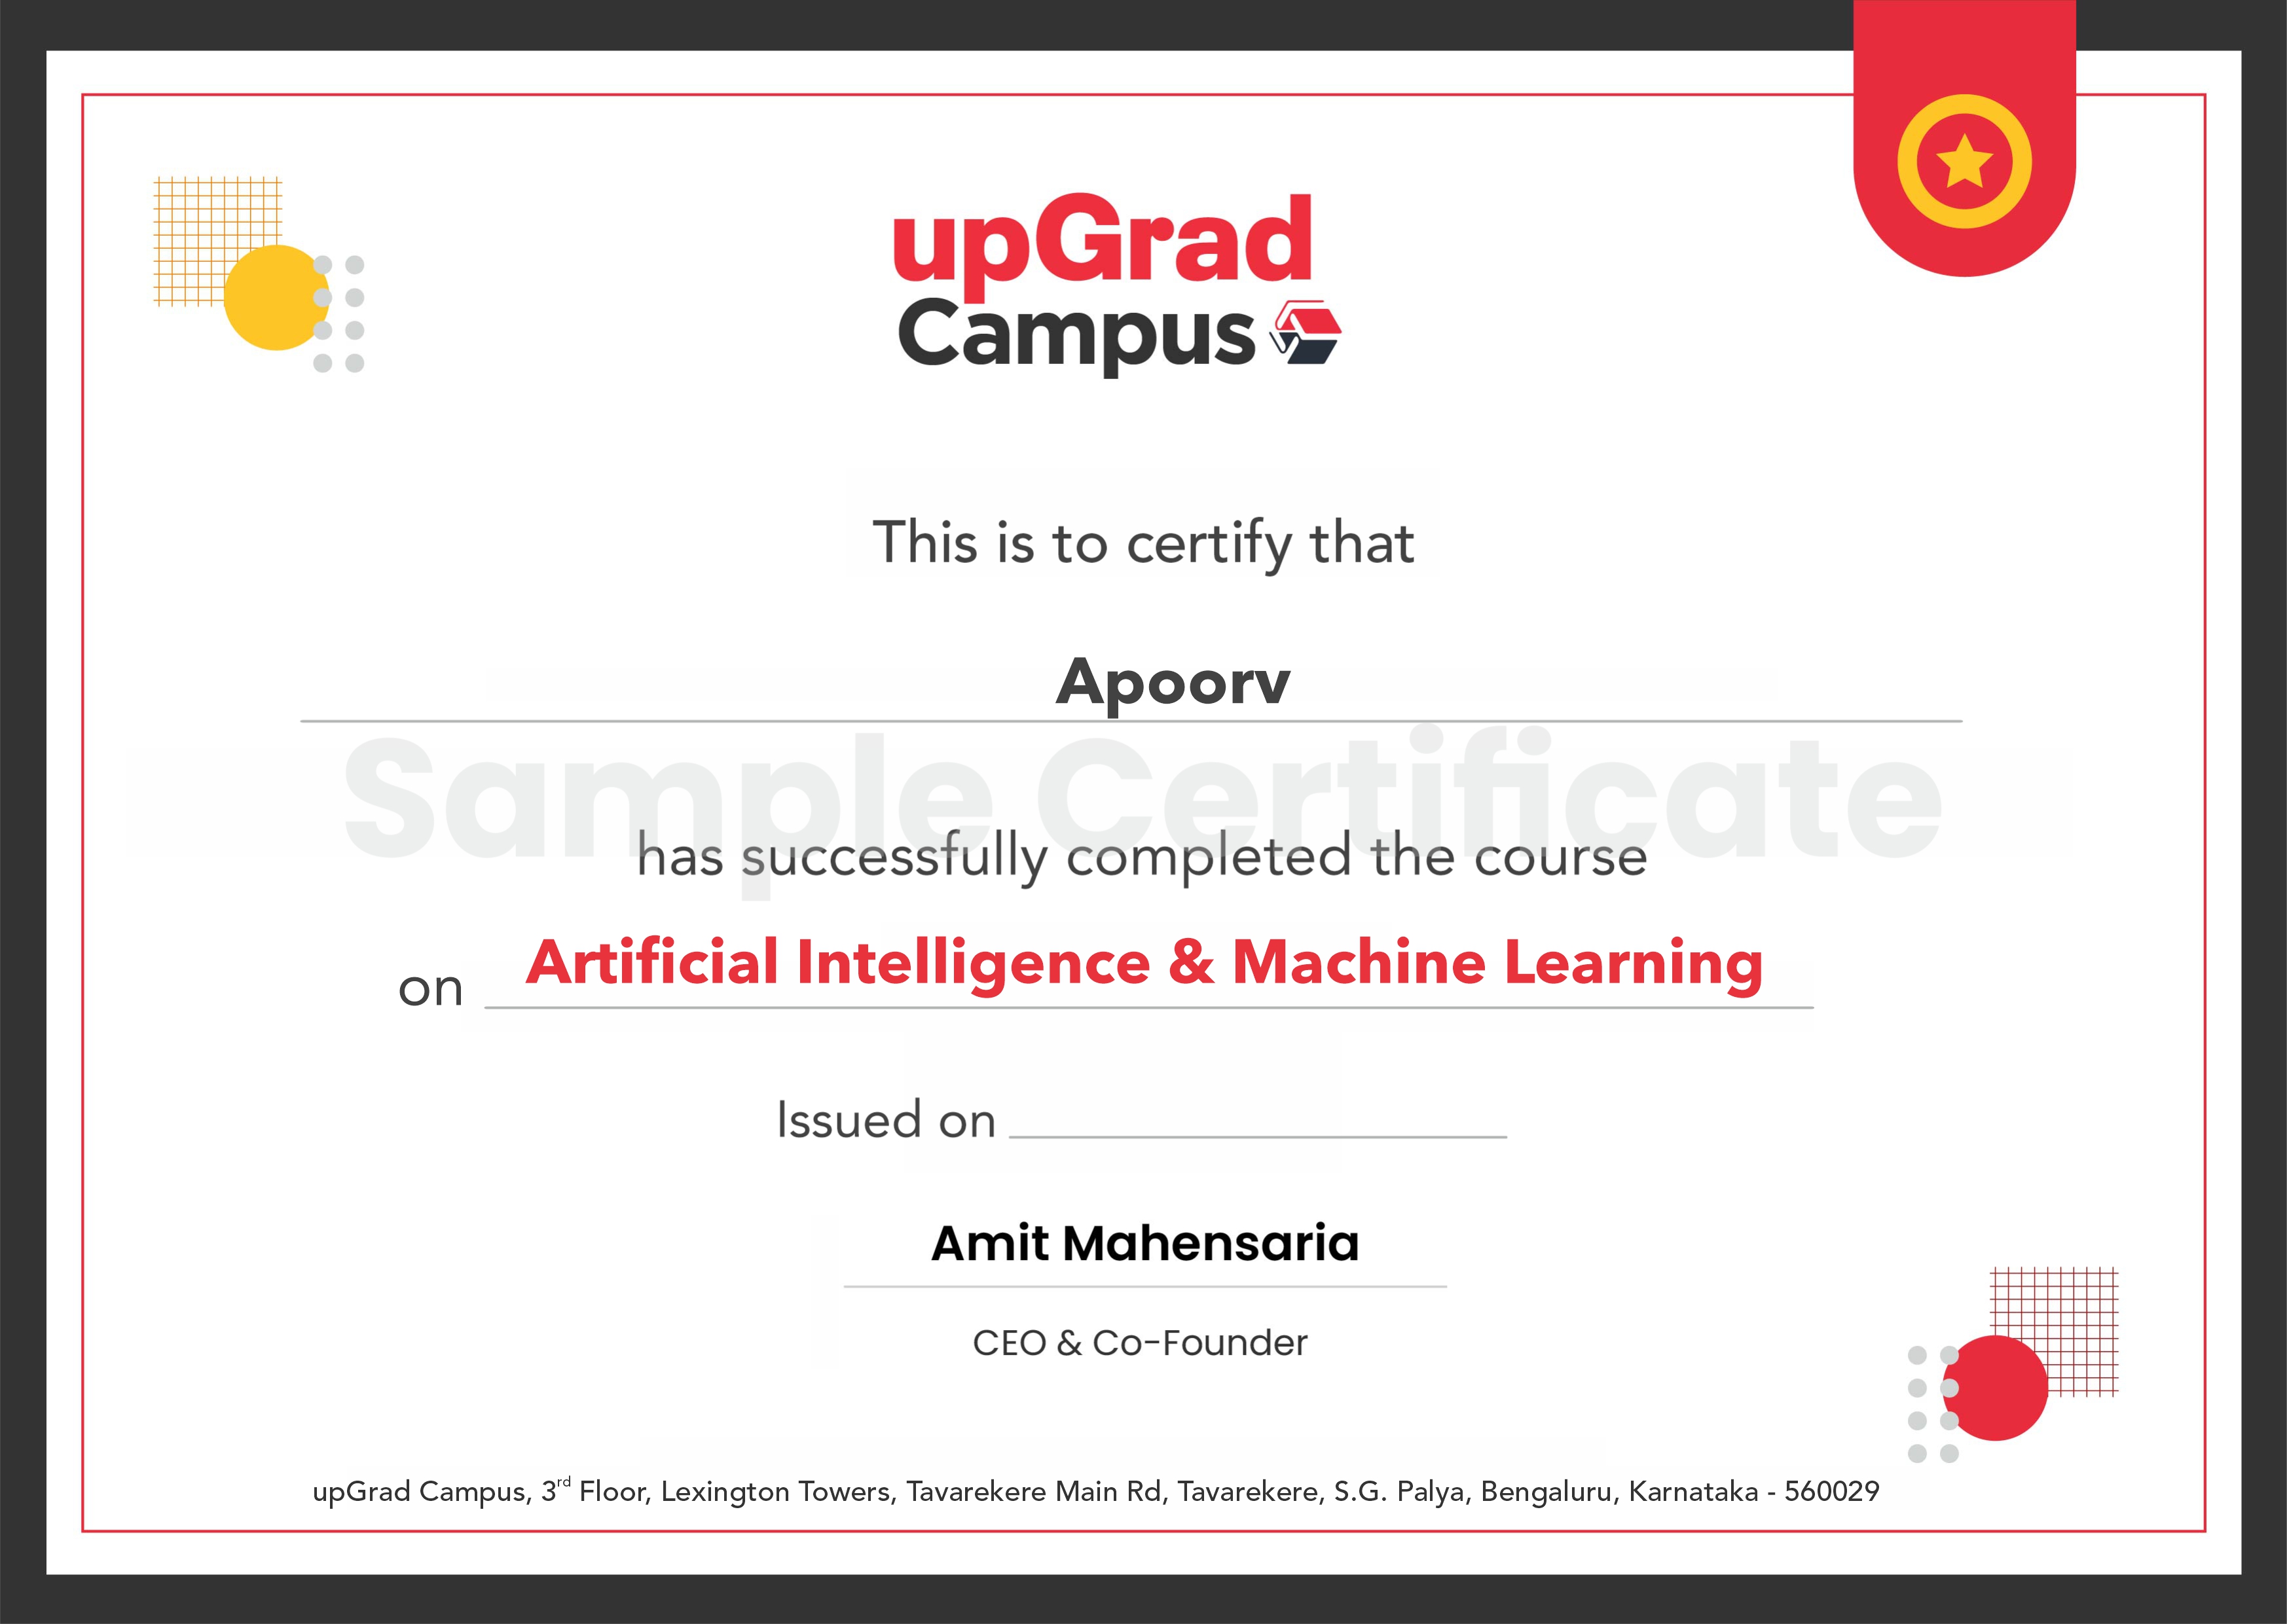 Applied AI course